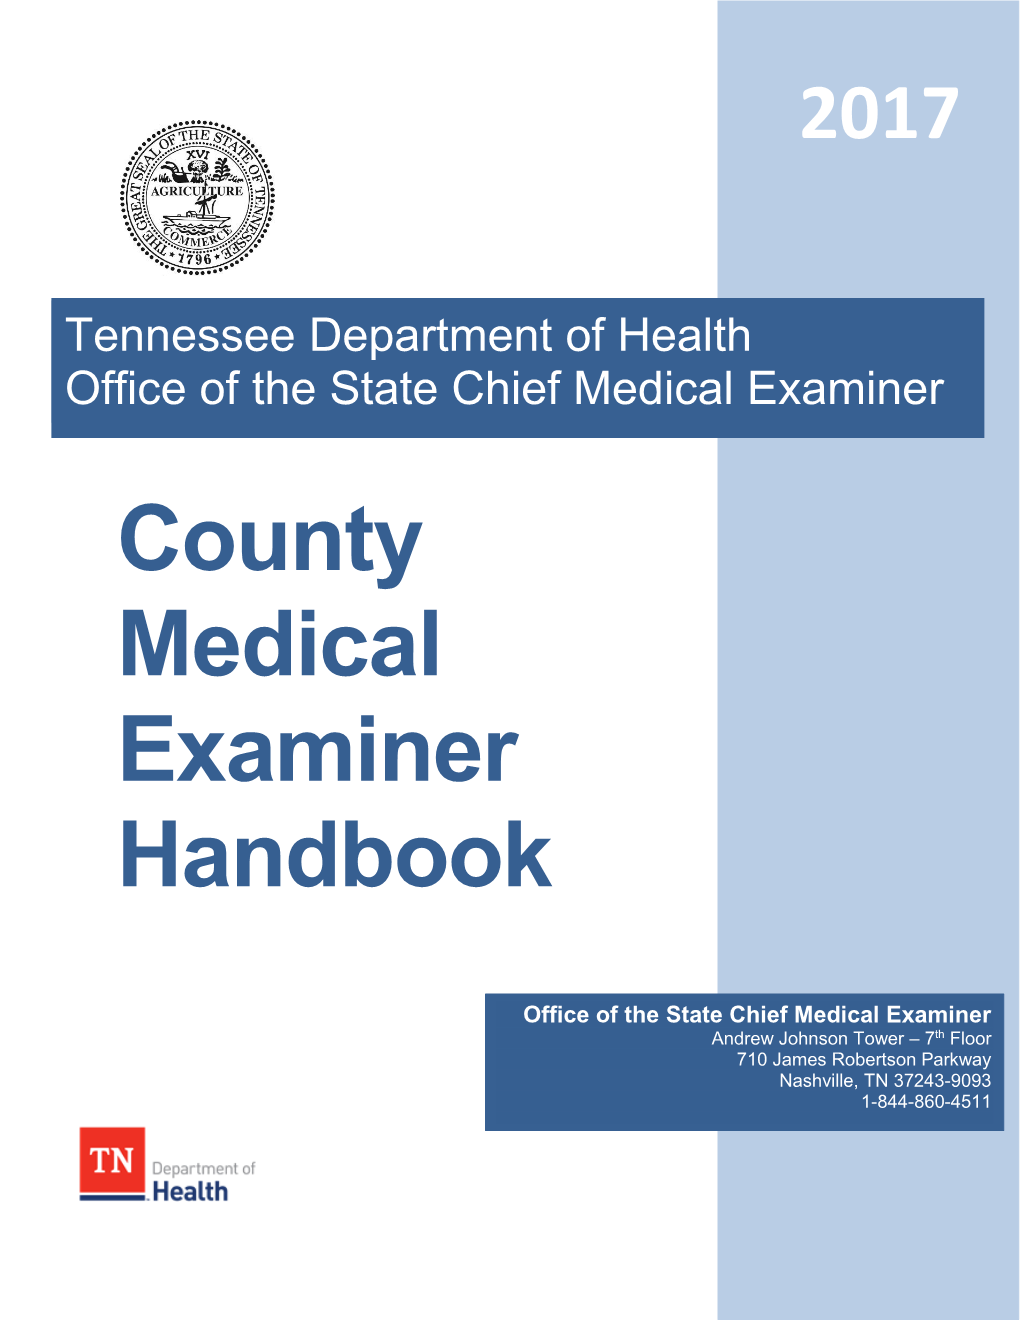 County Medical Examiner Handbook